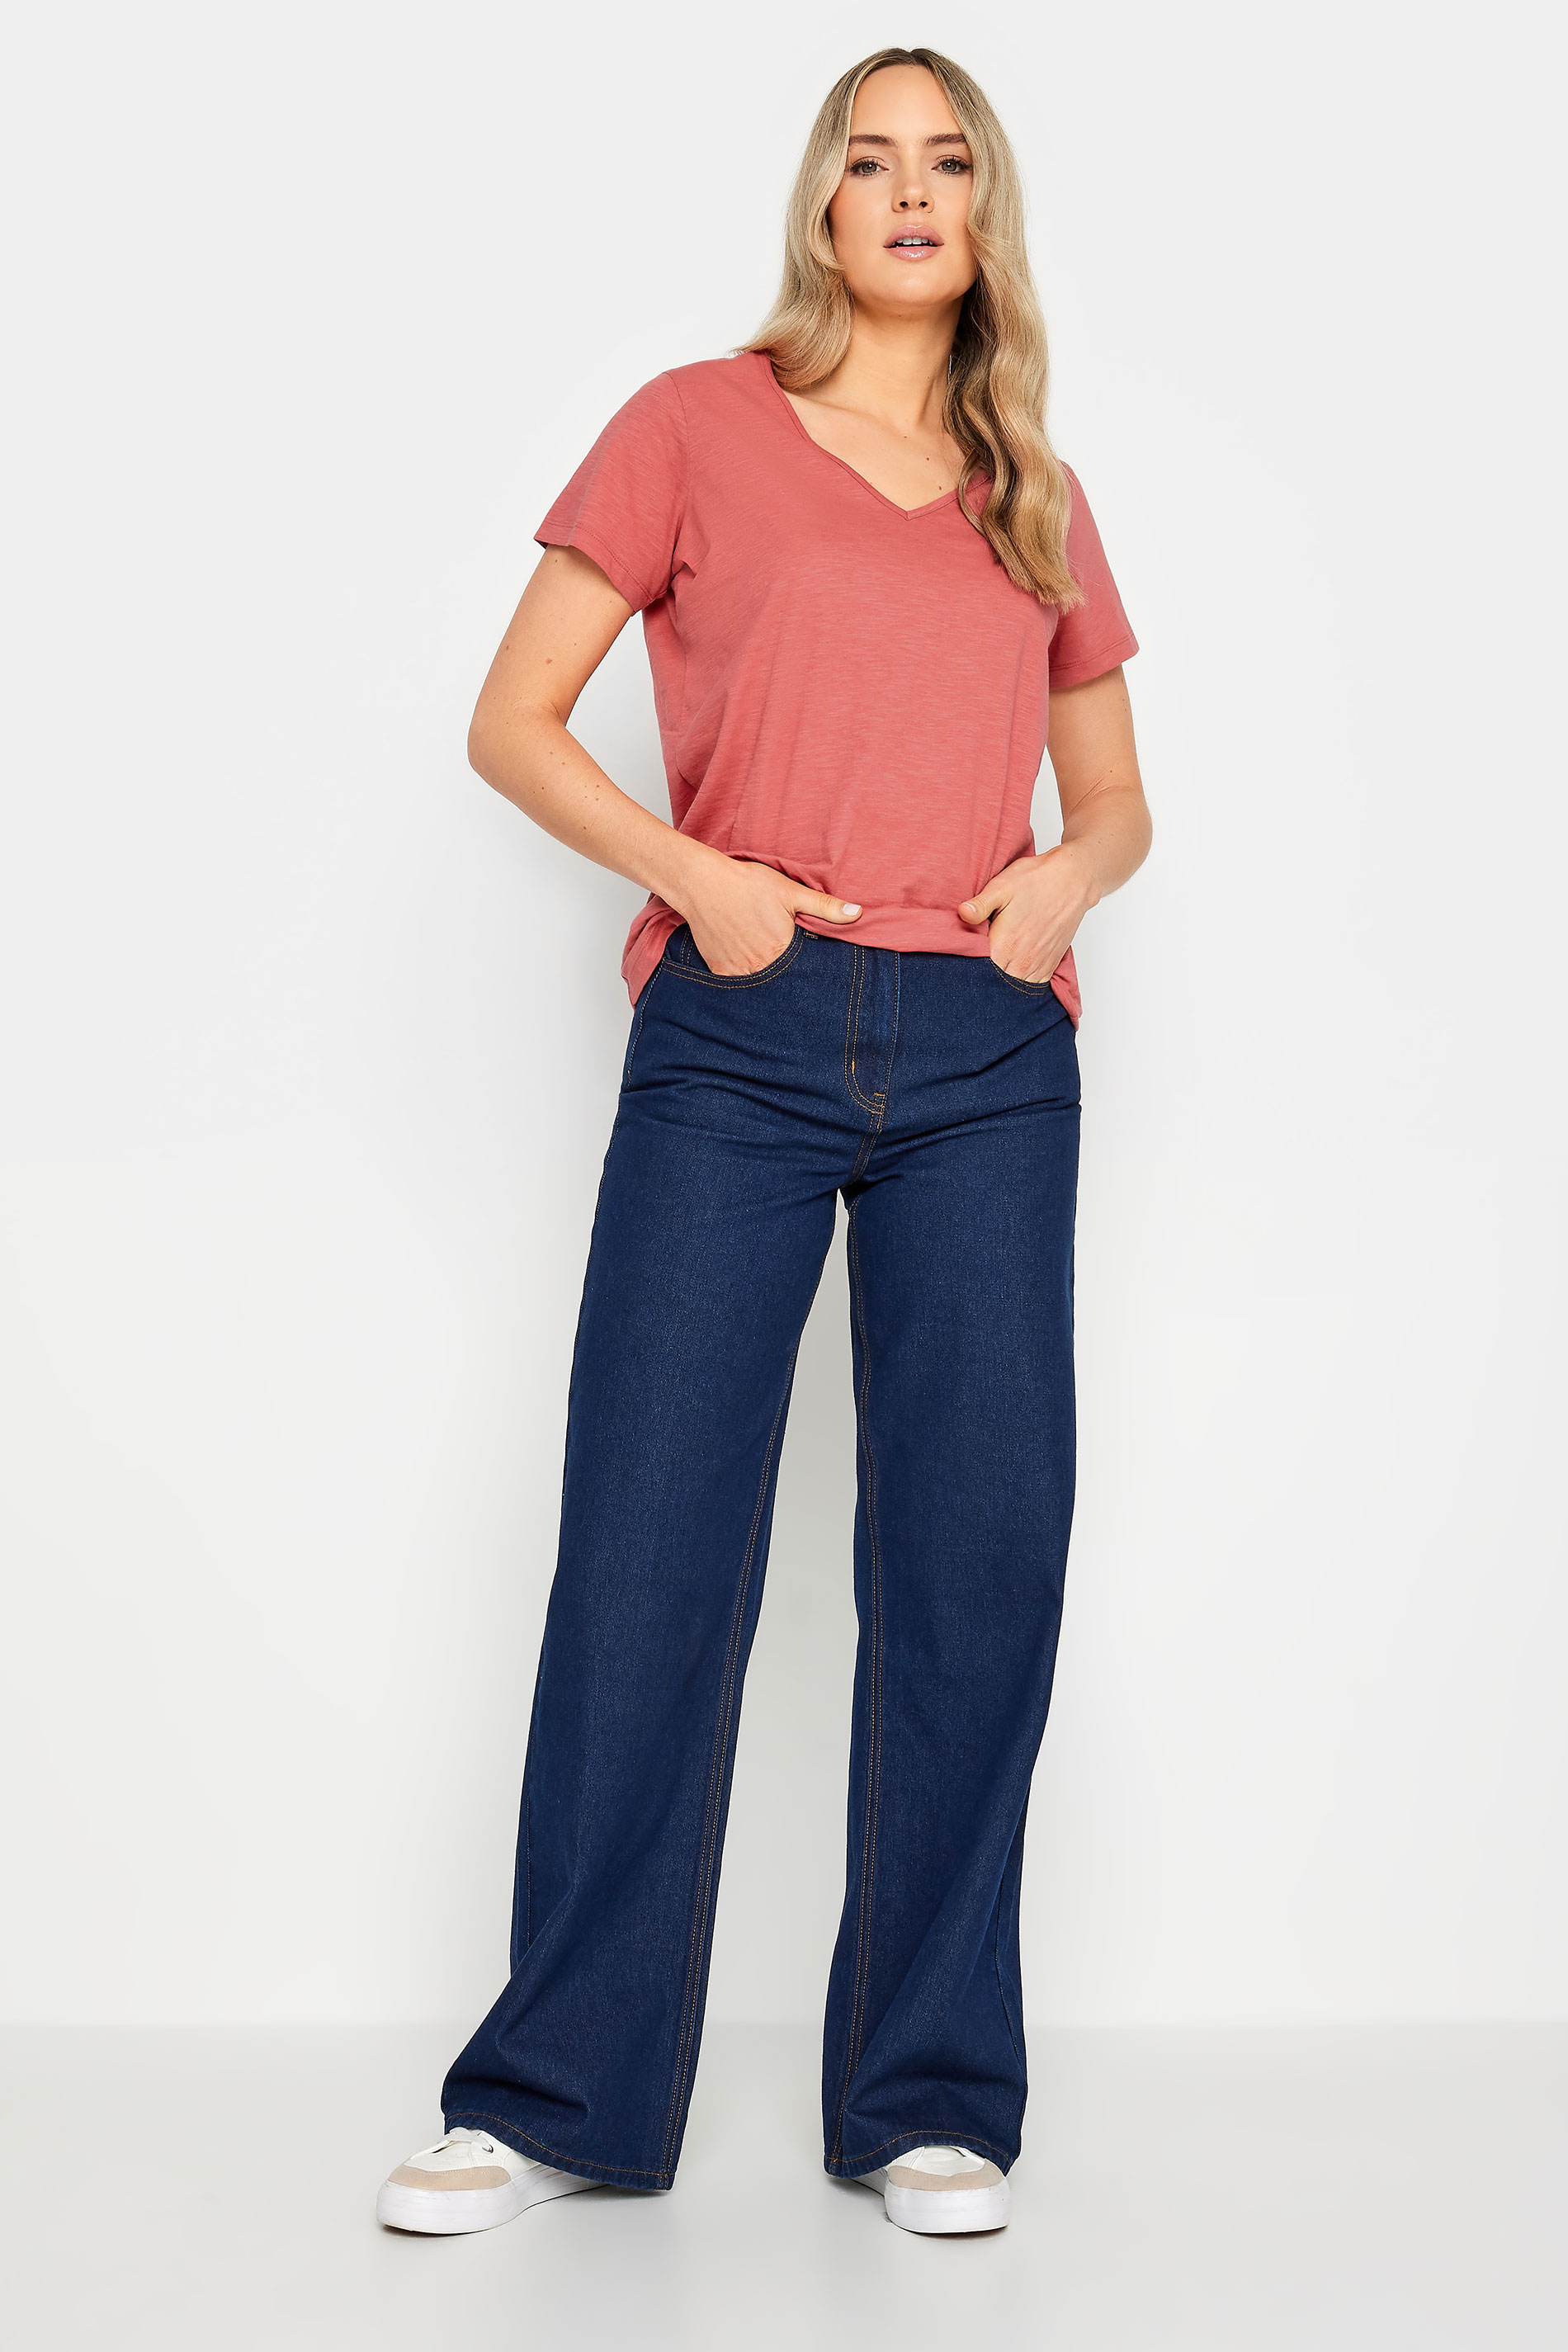 LTS Tall Womens Coral Pink V-Neck T-Shirt | Long Tall Sally 2